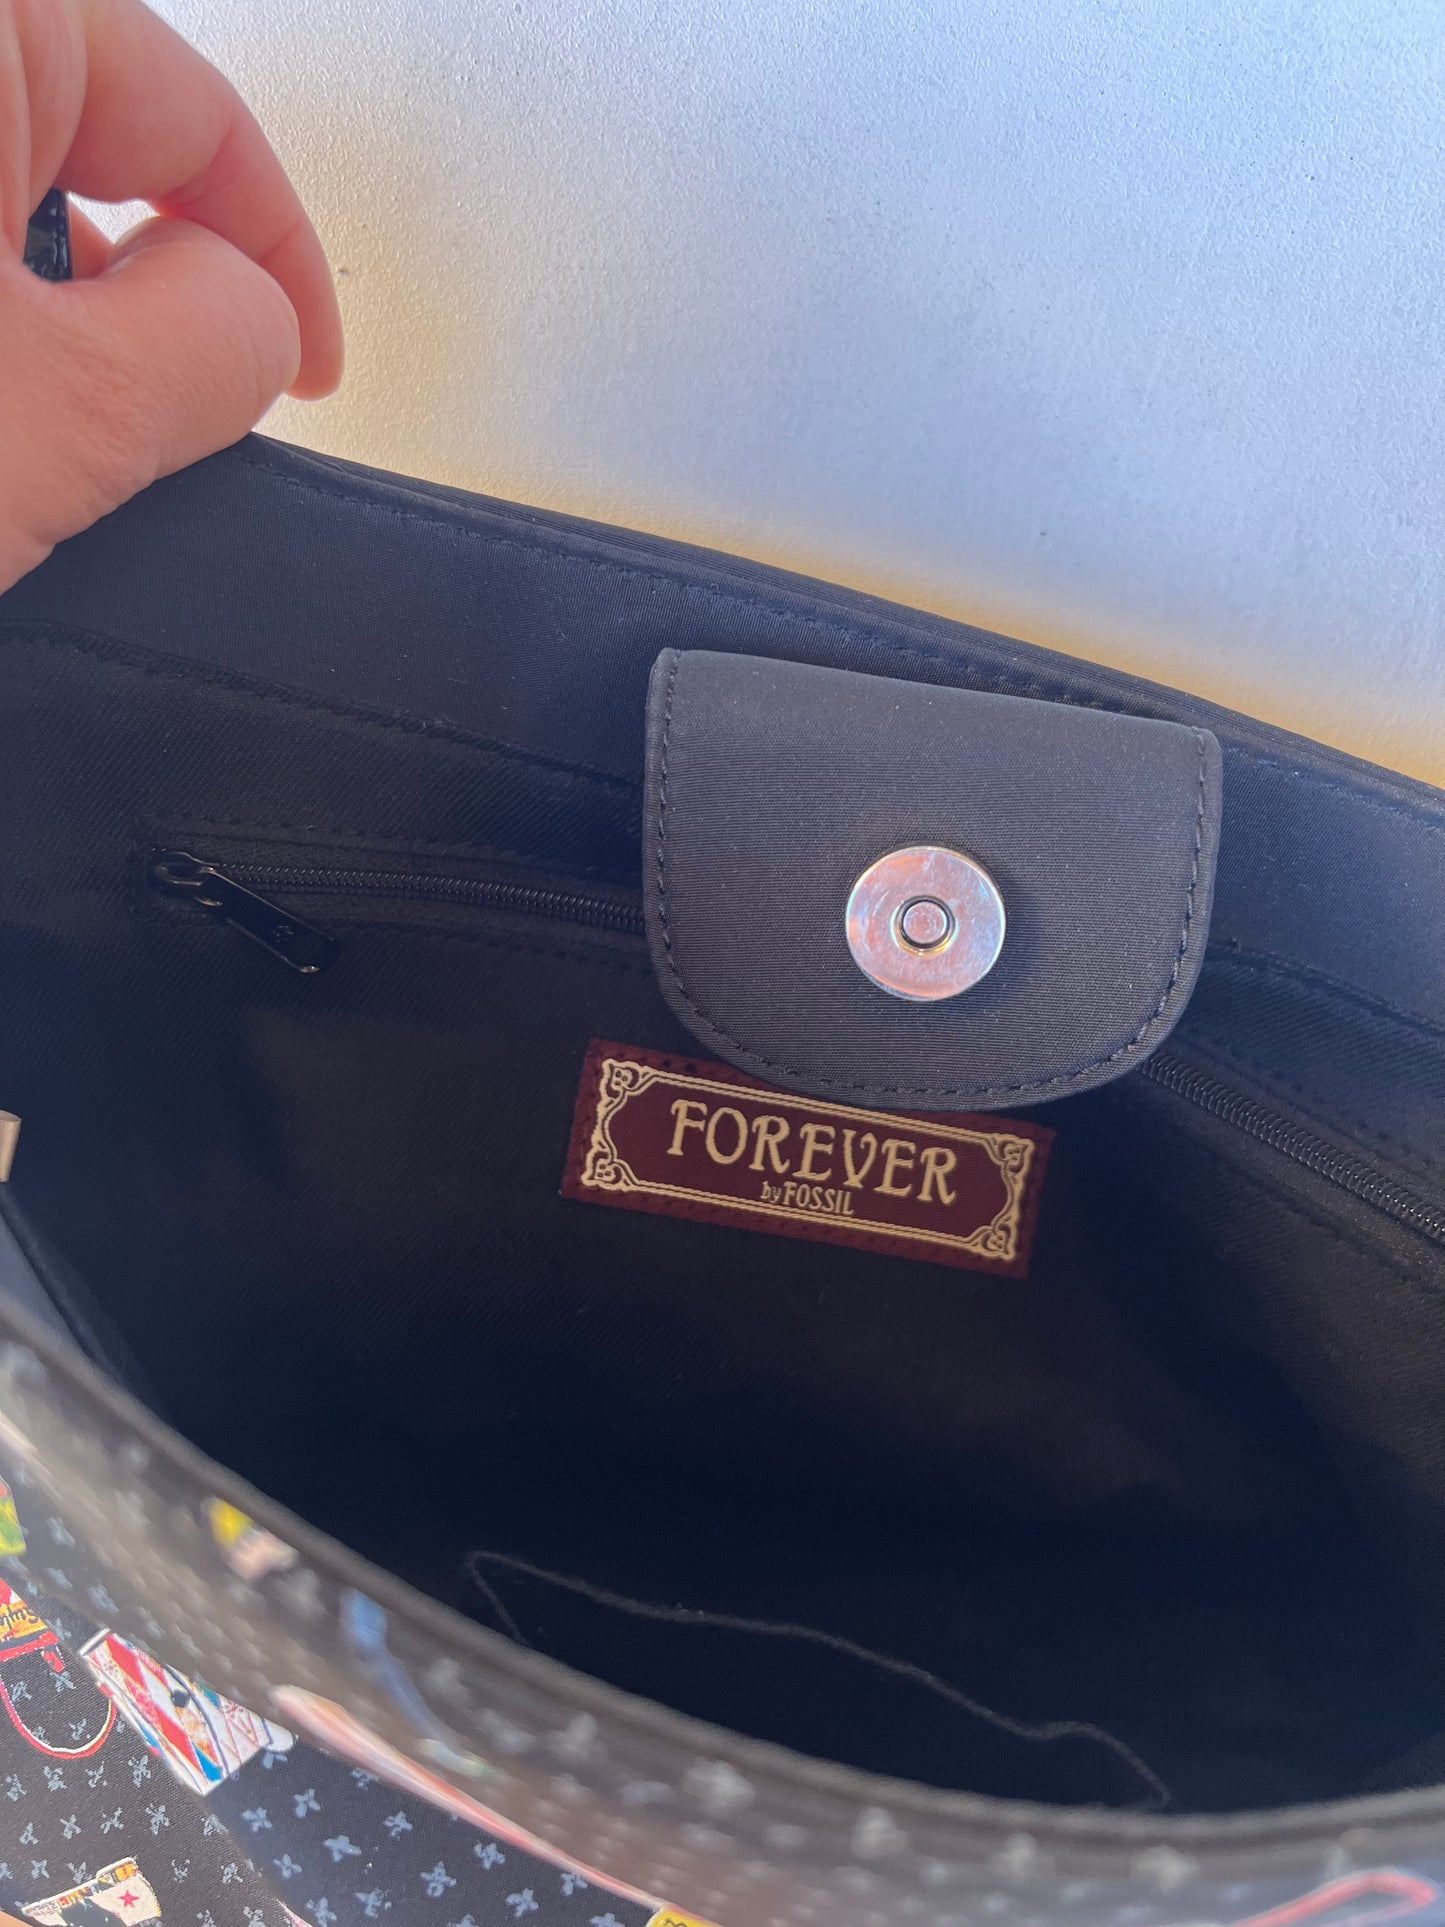 Forever by Fossil Printed Handbag - Black